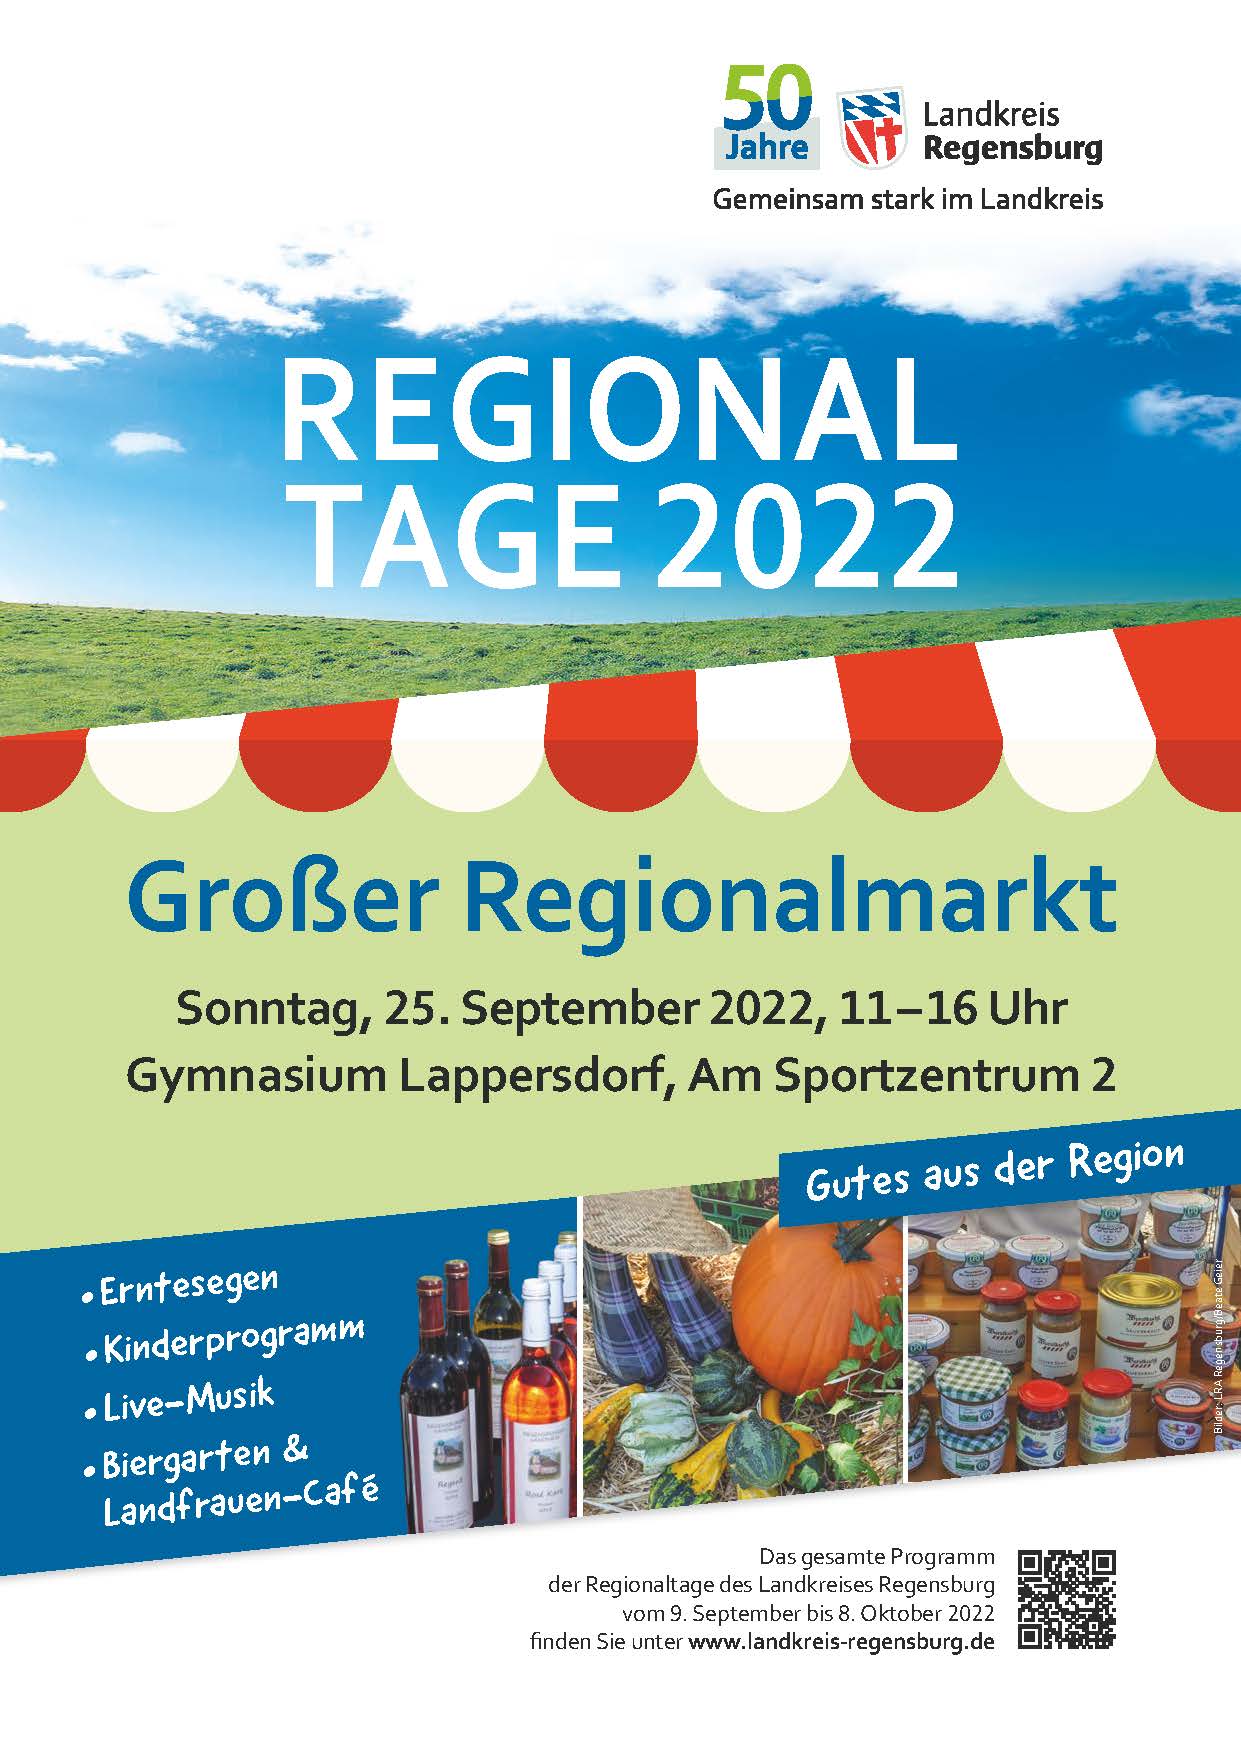 Regionalmarkt in Lappersdorf